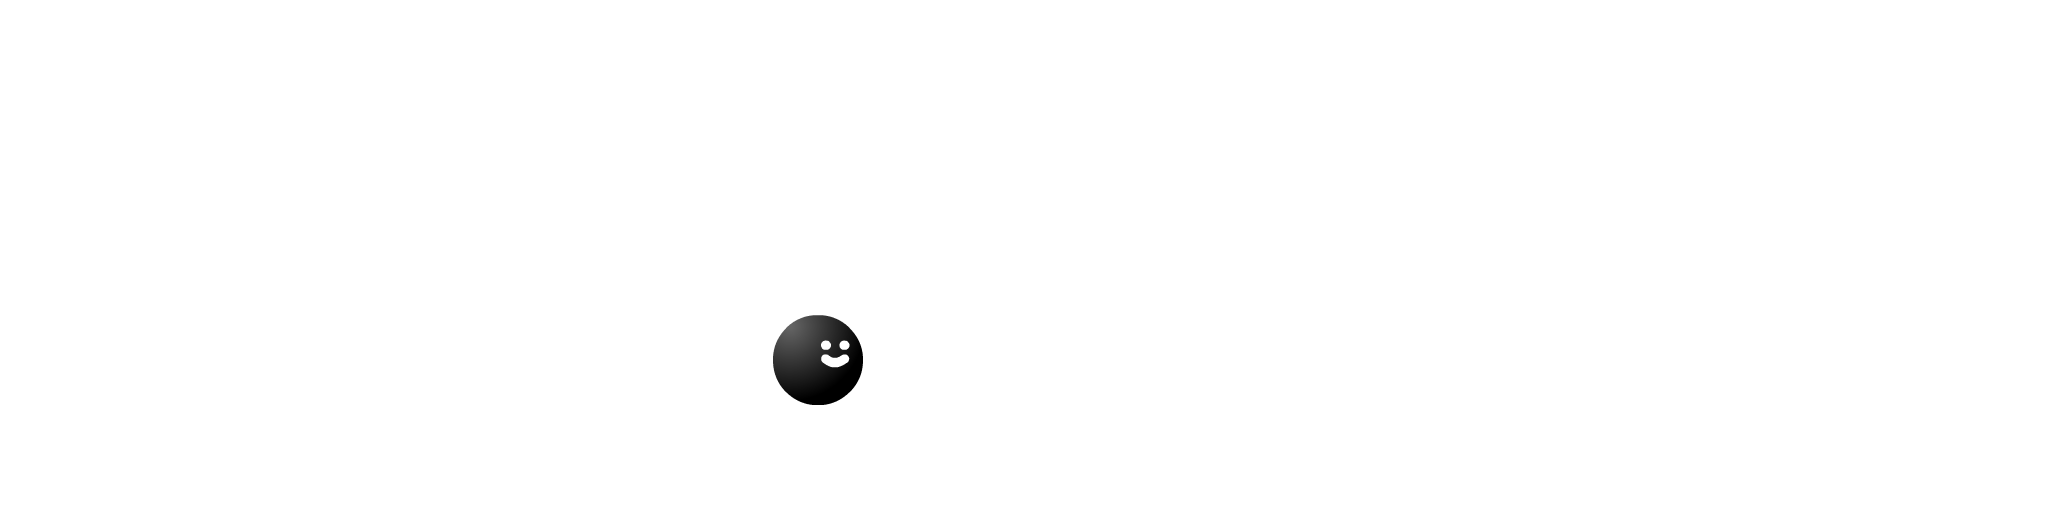 small orbits